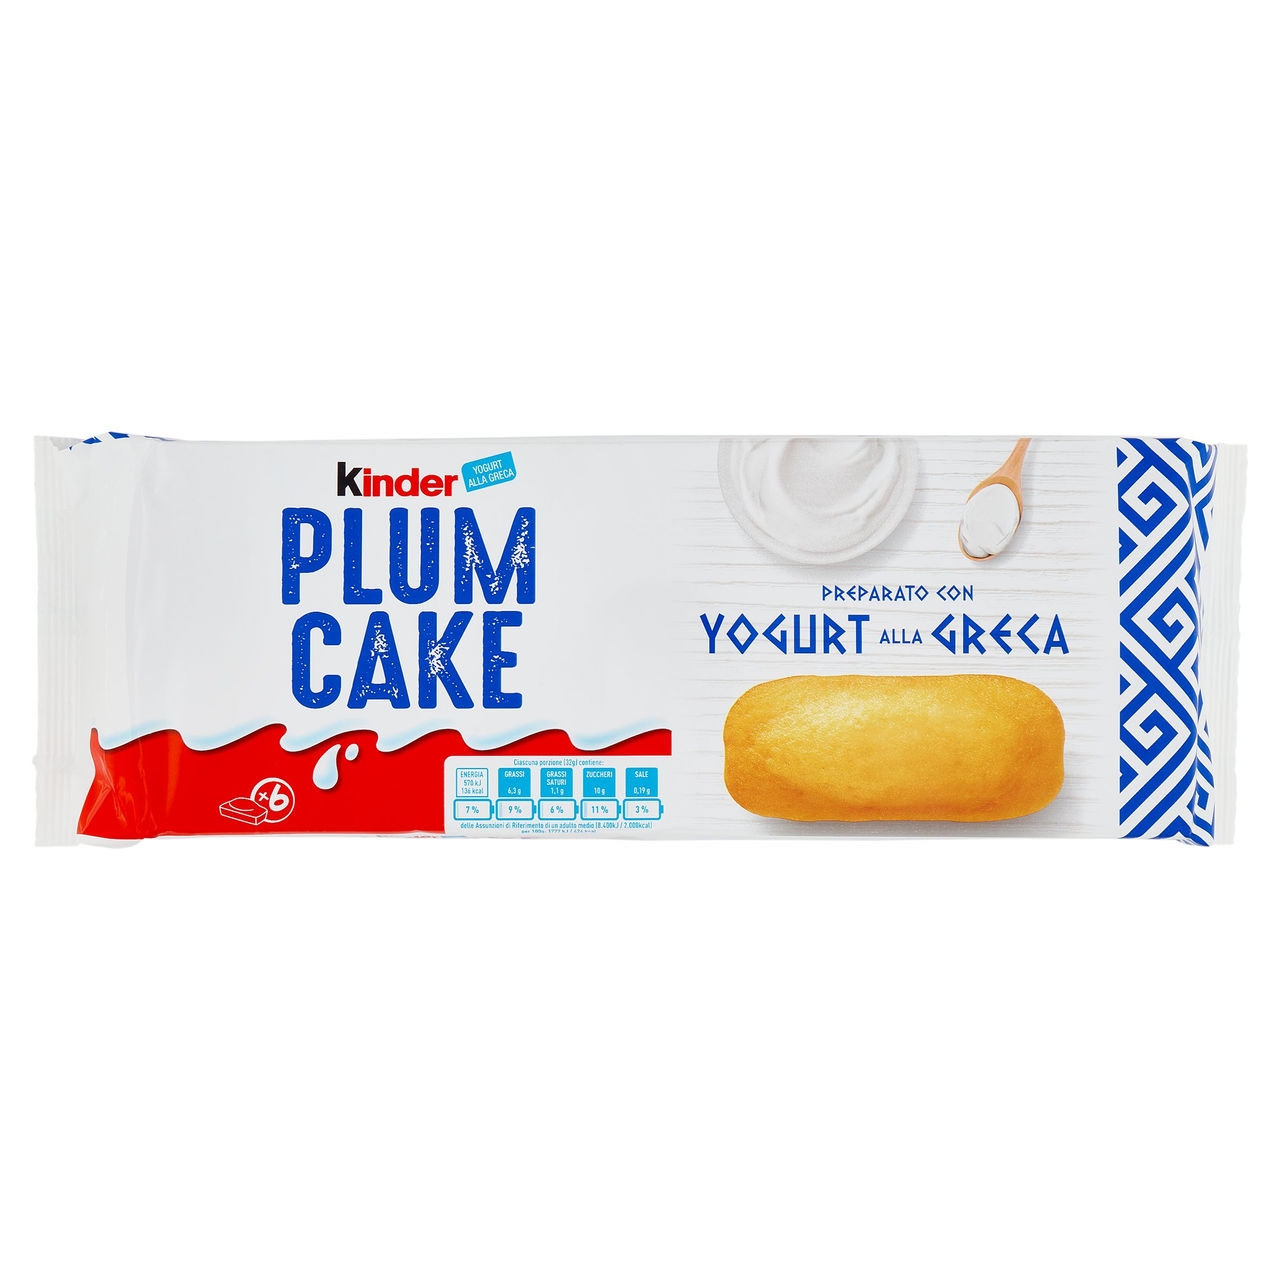 Kinder Plum Cake con Yogurt alla Greca 6x32g